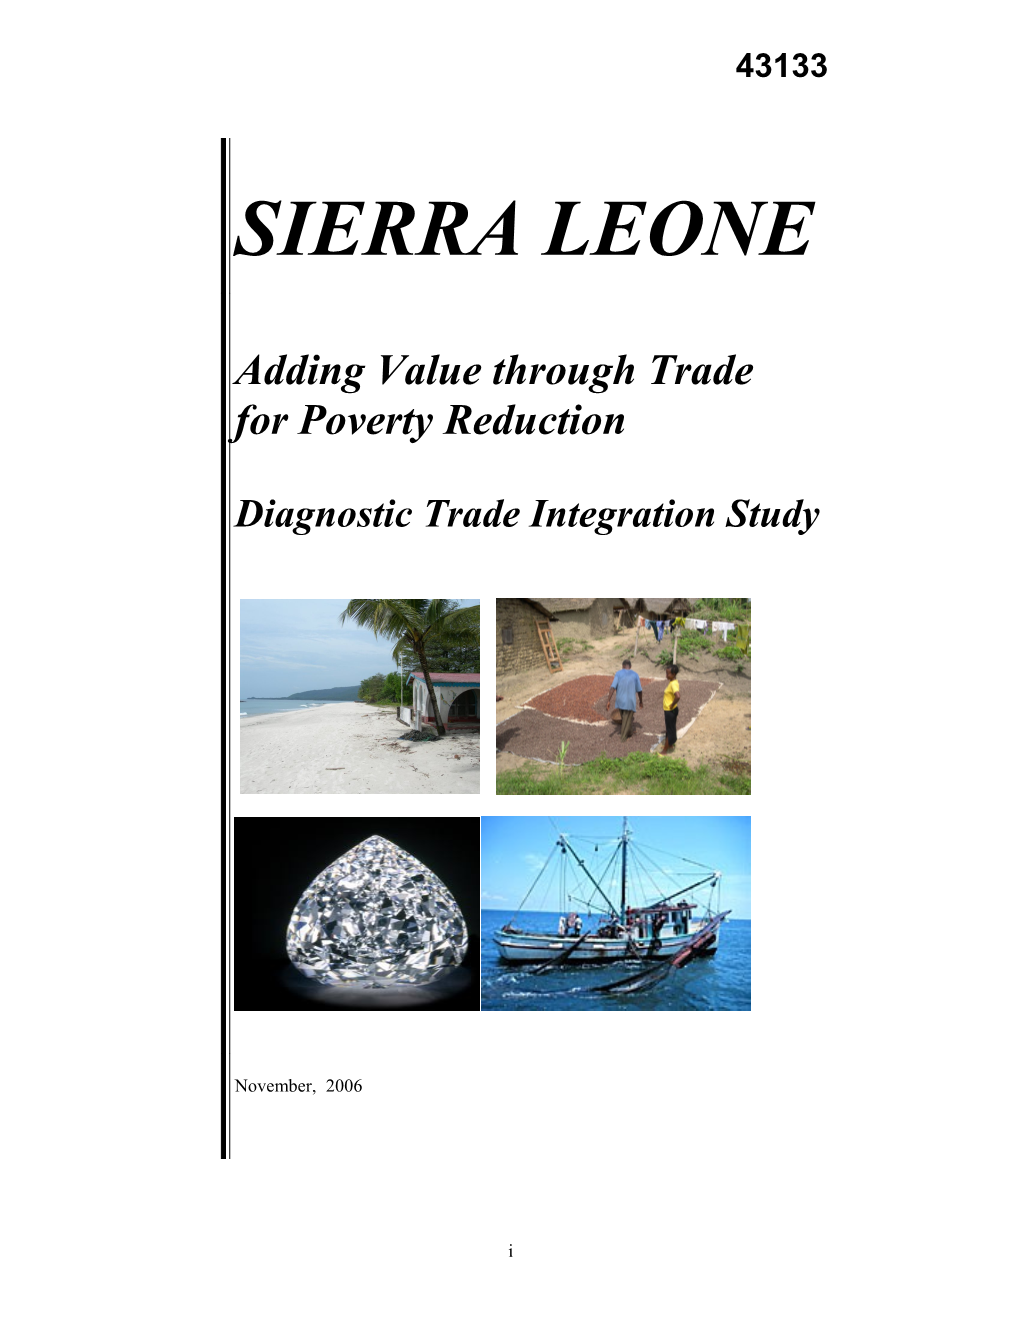 Diagnostic Trade Integration Study